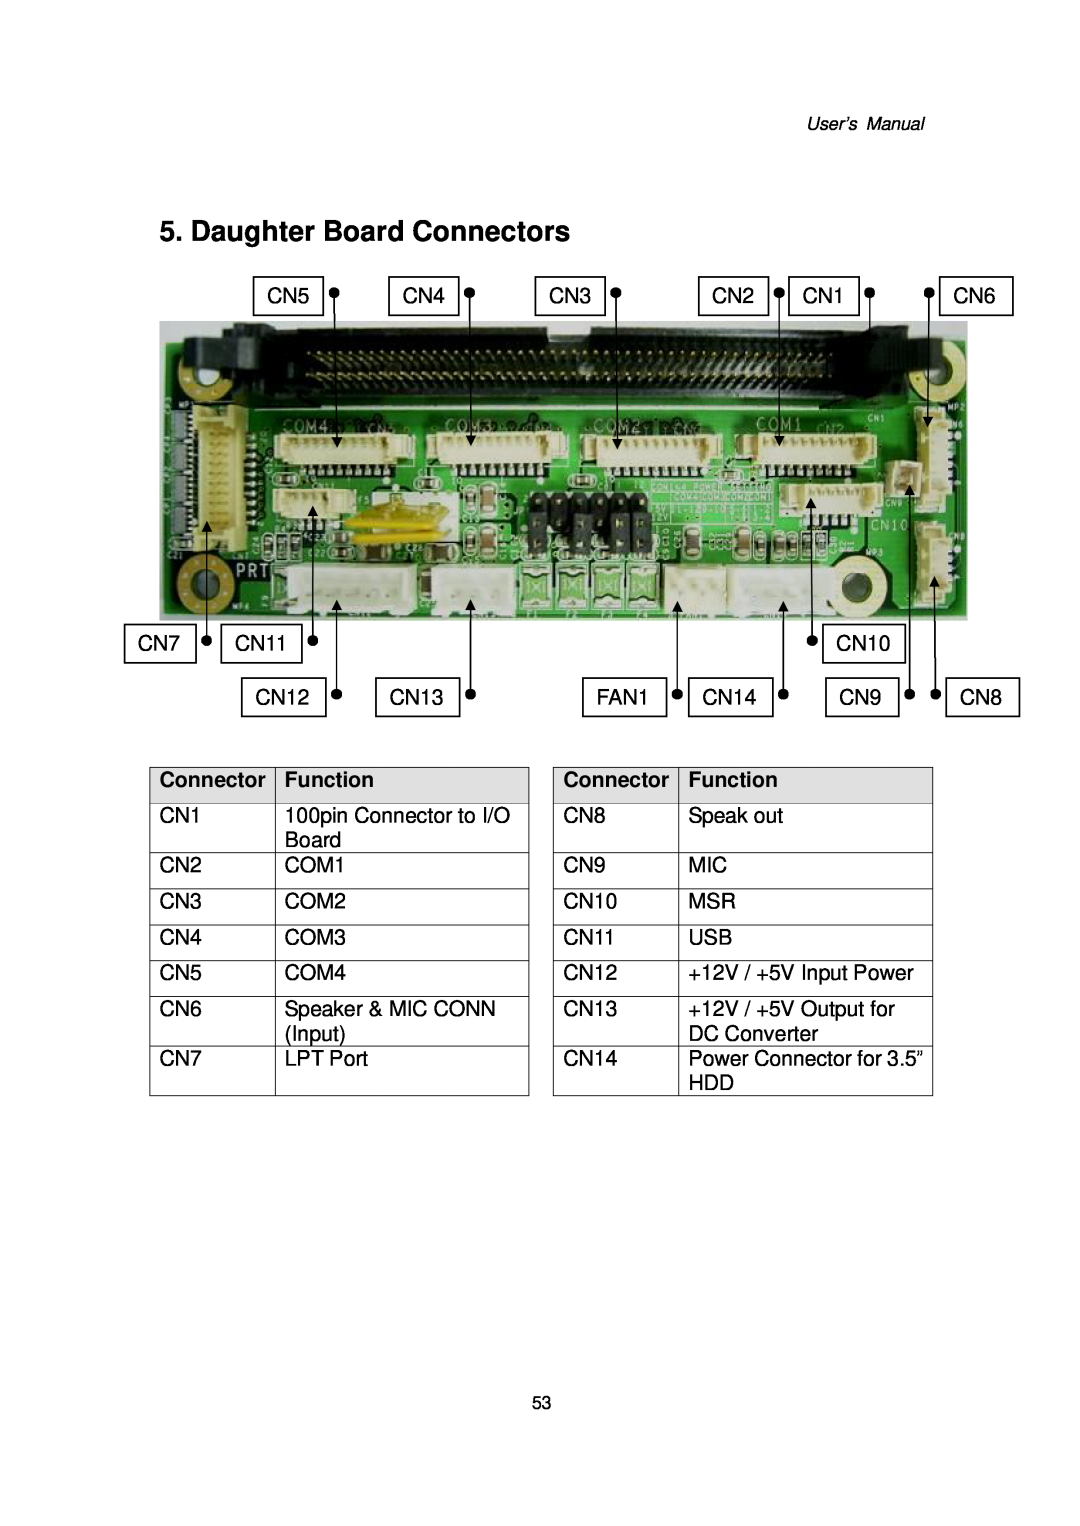 Intel Kiosk Hardware System, 48201201 user manual Daughter Board Connectors, Function 